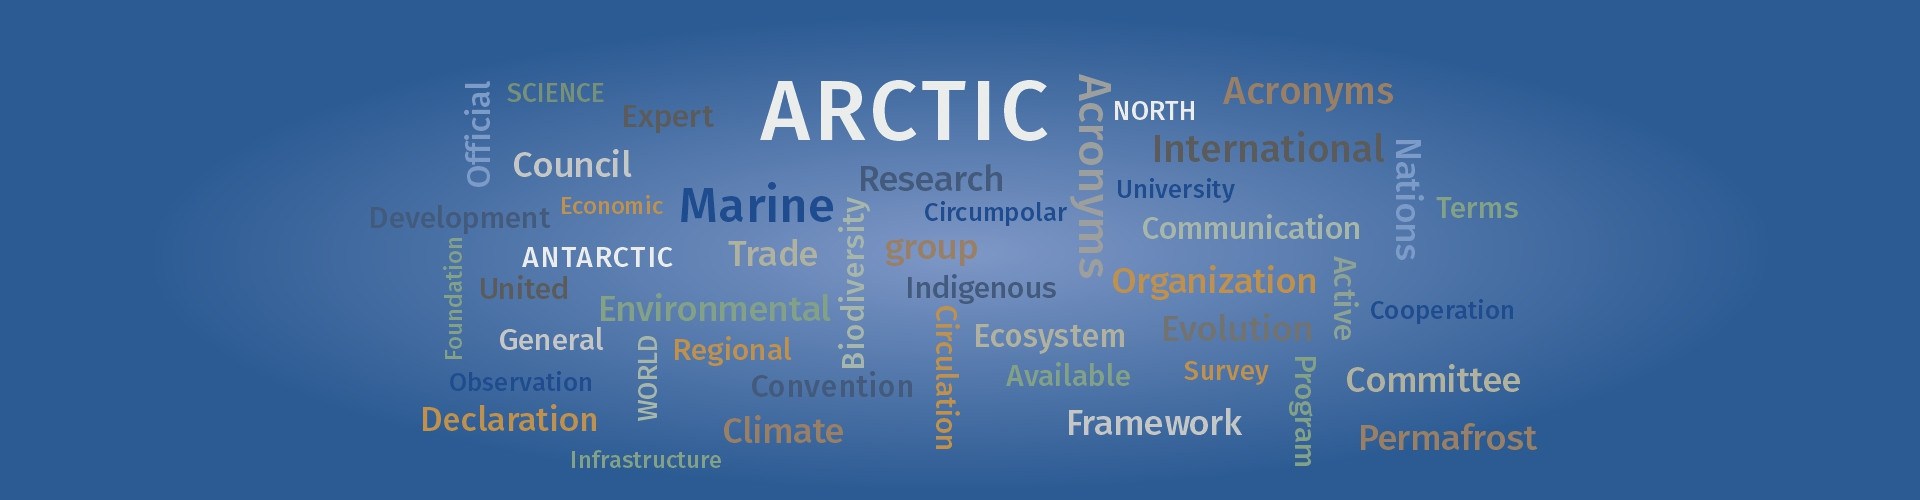 Arctic Portal arctic acronyms